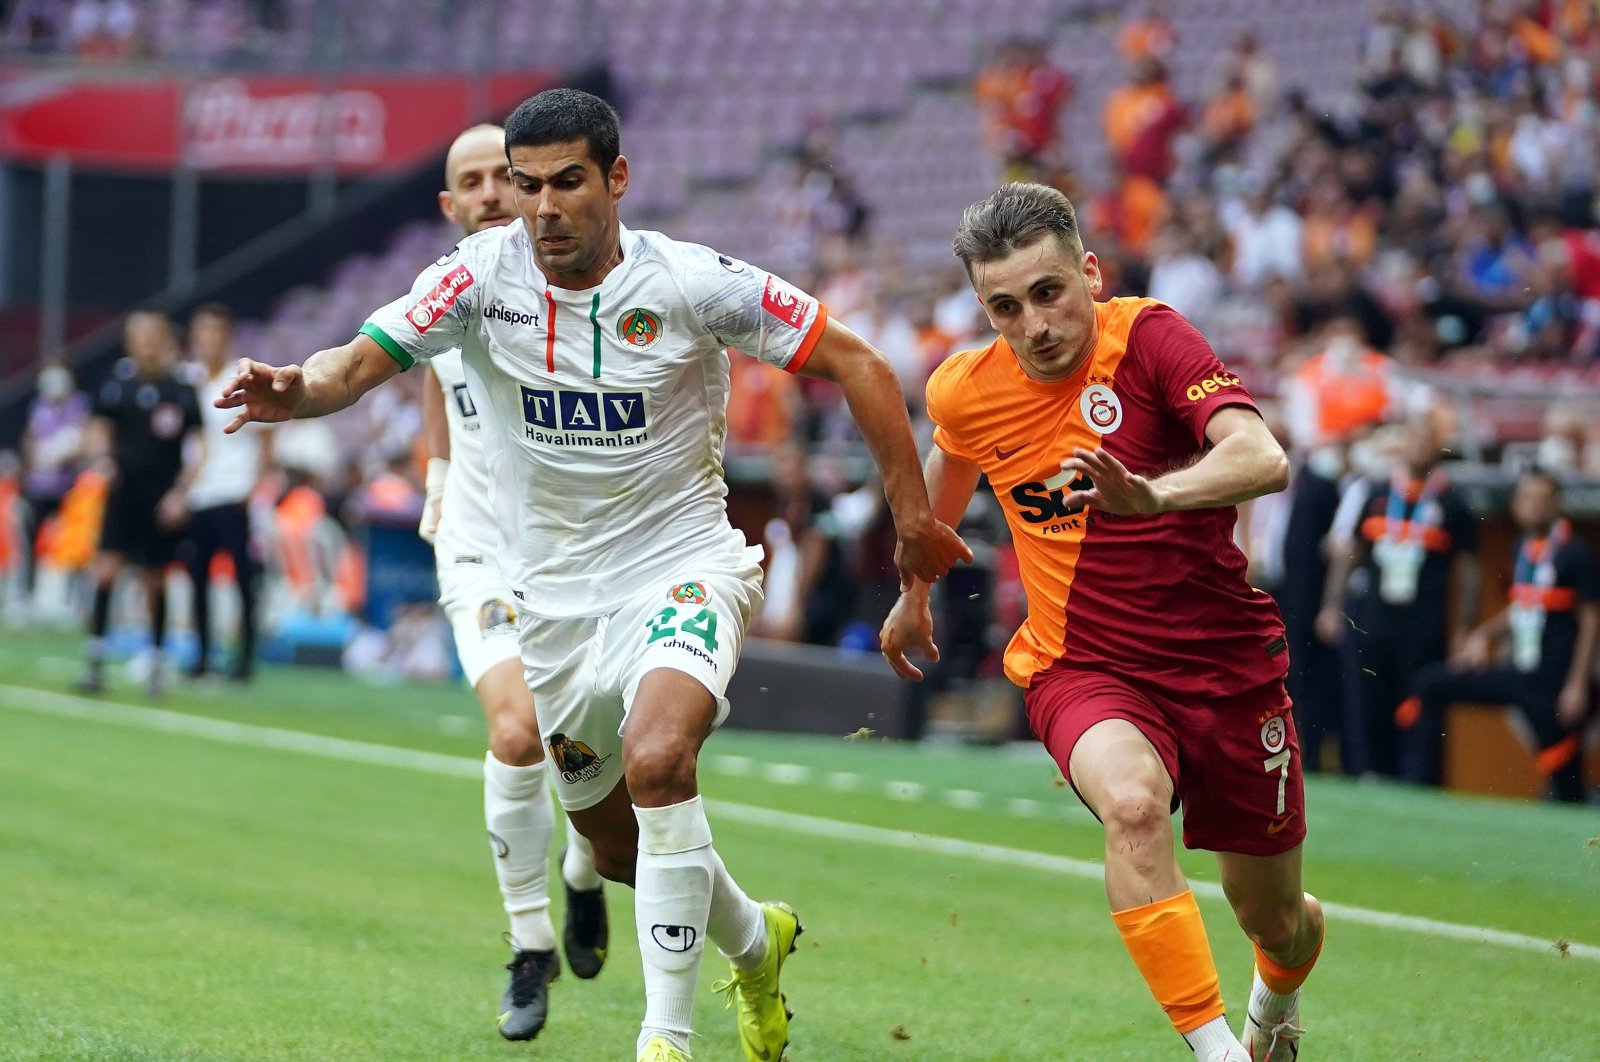 Aytemiz Alanyaspor and Galatasaray game at Türk Telekom Stadium in Istanbul, Turkey, Sunday, Sept. 19, 2021. (IHA Photo)